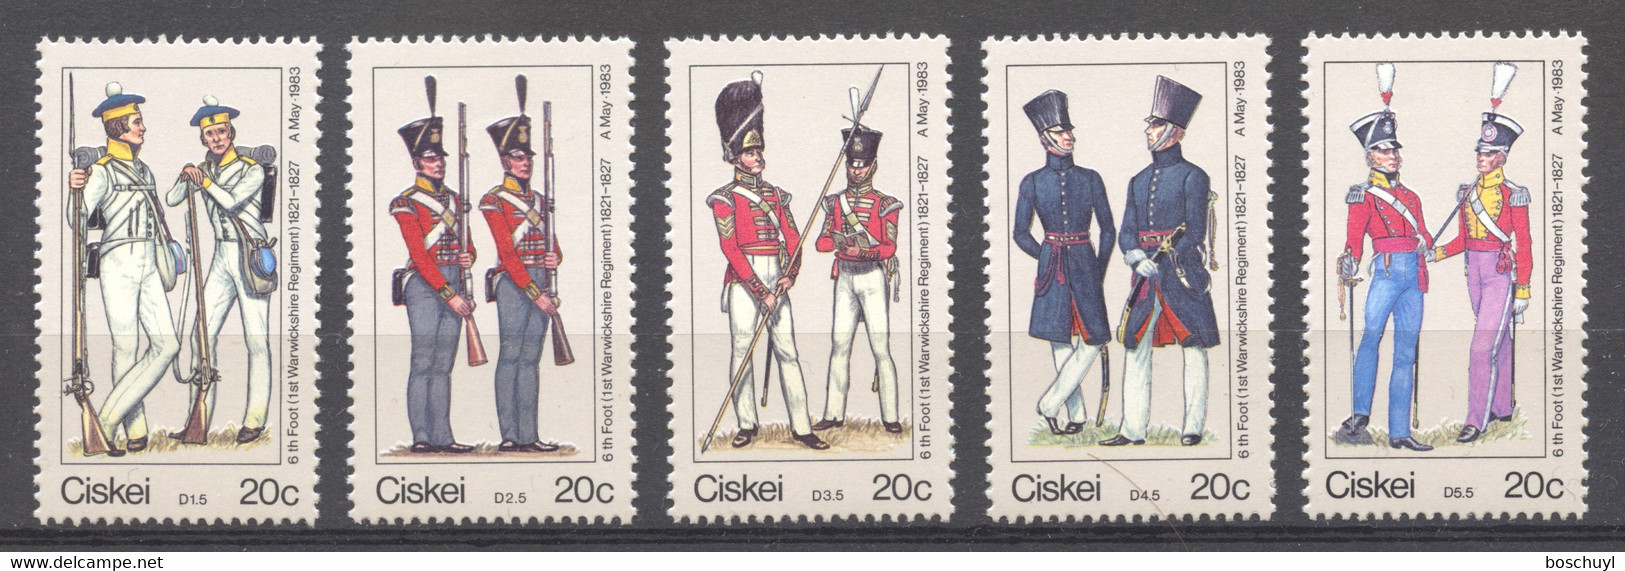 Ciskei, 1983, Military Uniforms, Army, MNH, Michel 47-51 - Ciskei